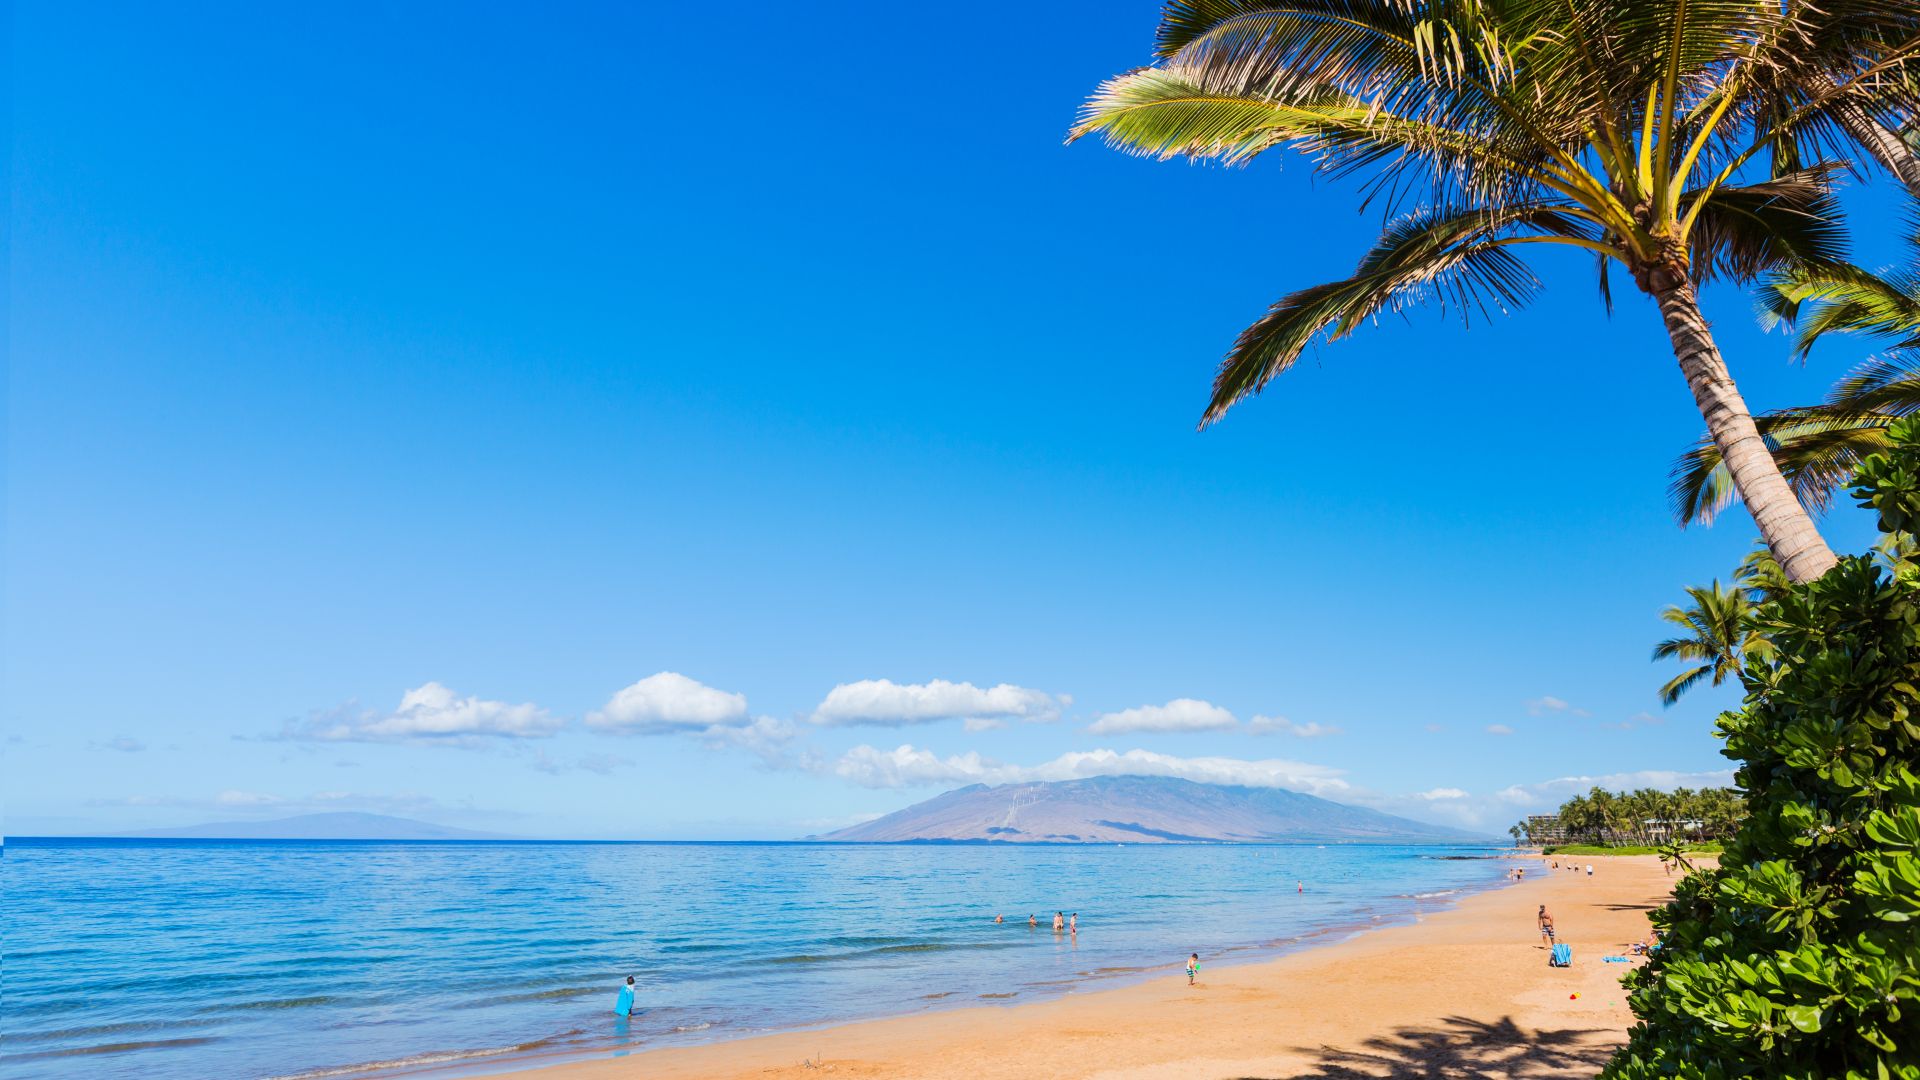 Мауи, пляж, Maui, Hawaii, beach, ocean, coast, palm, sky, 5k (horizontal)